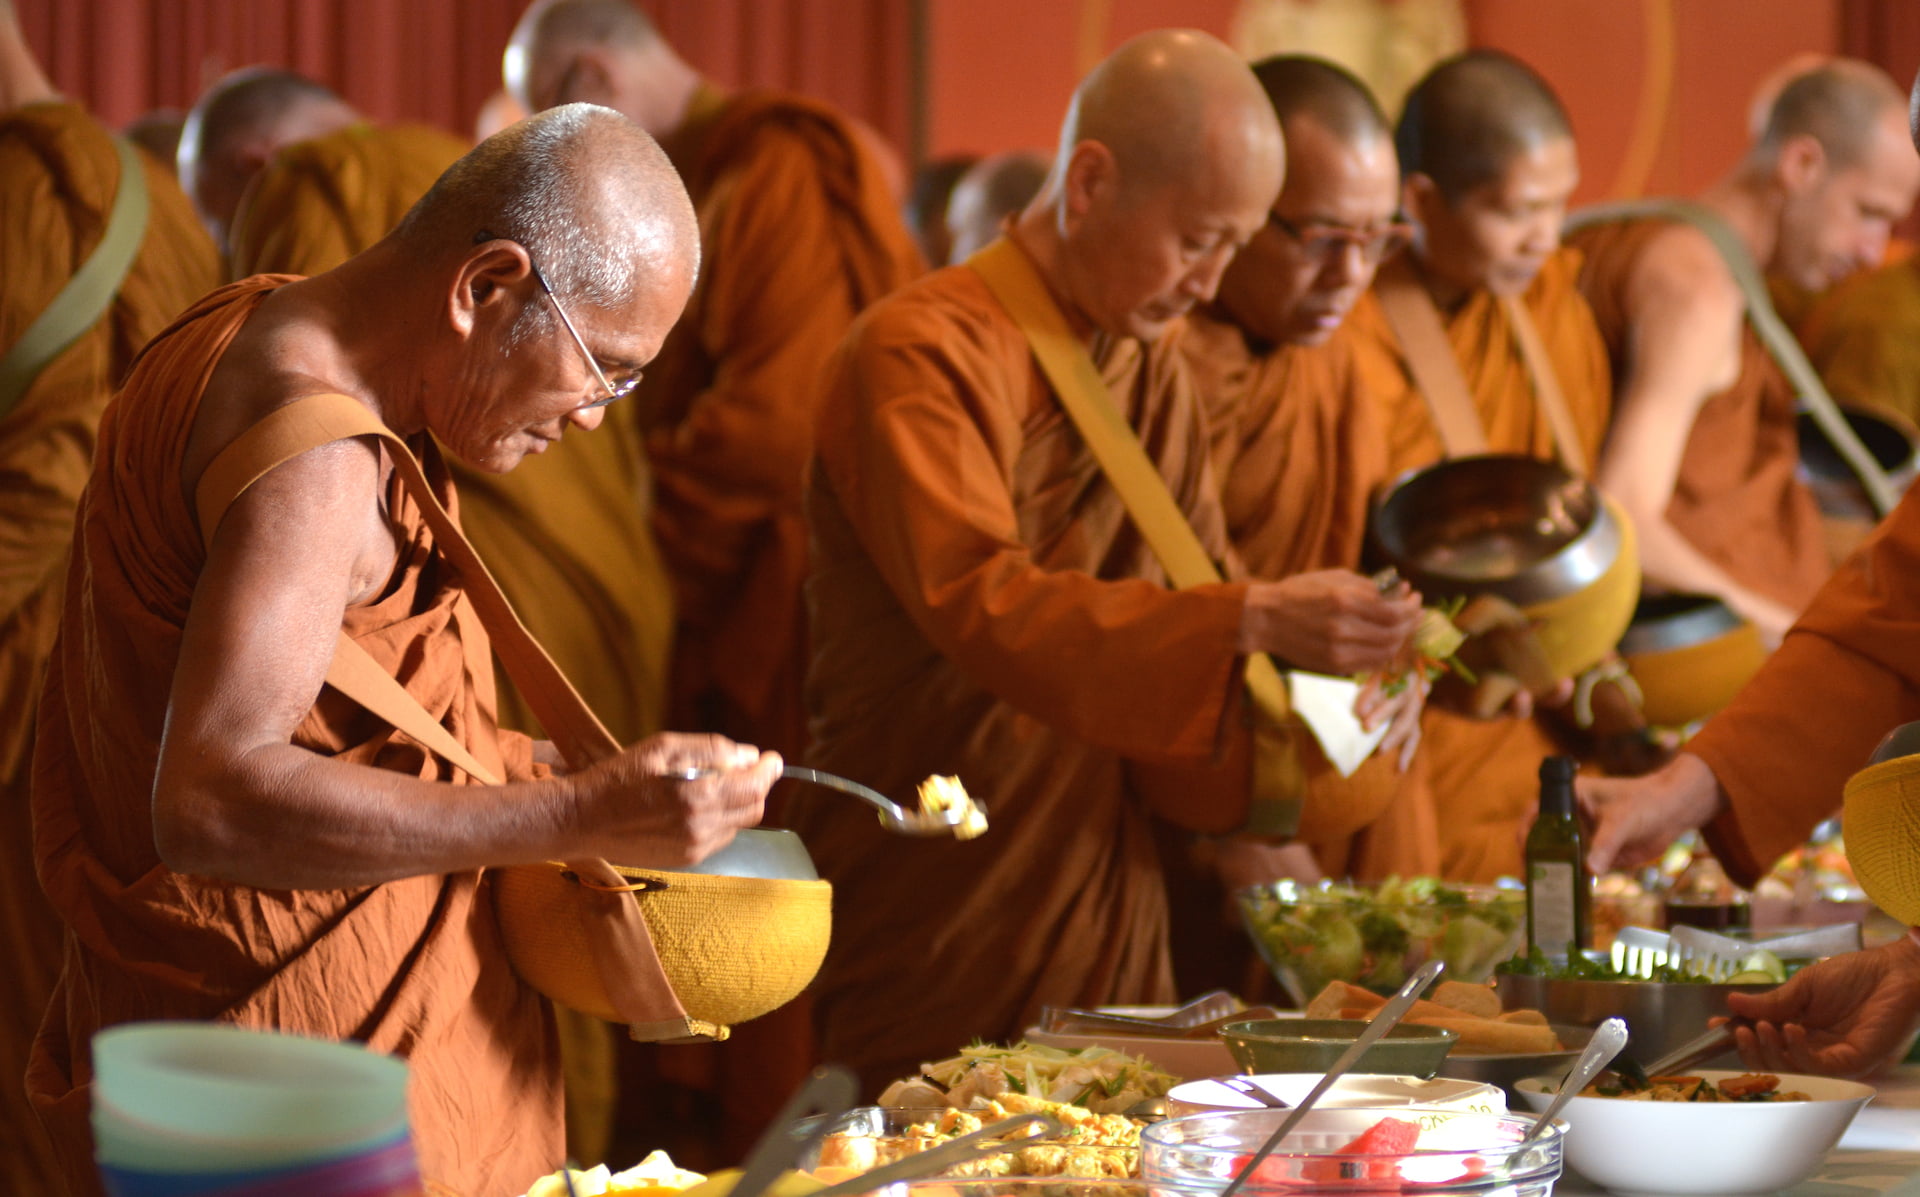 Монахи едят мясо. Будда Шаолинь. Буддийский монах Тхеравада. Пища монахов Шаолиня. Пища буддийских монахов.